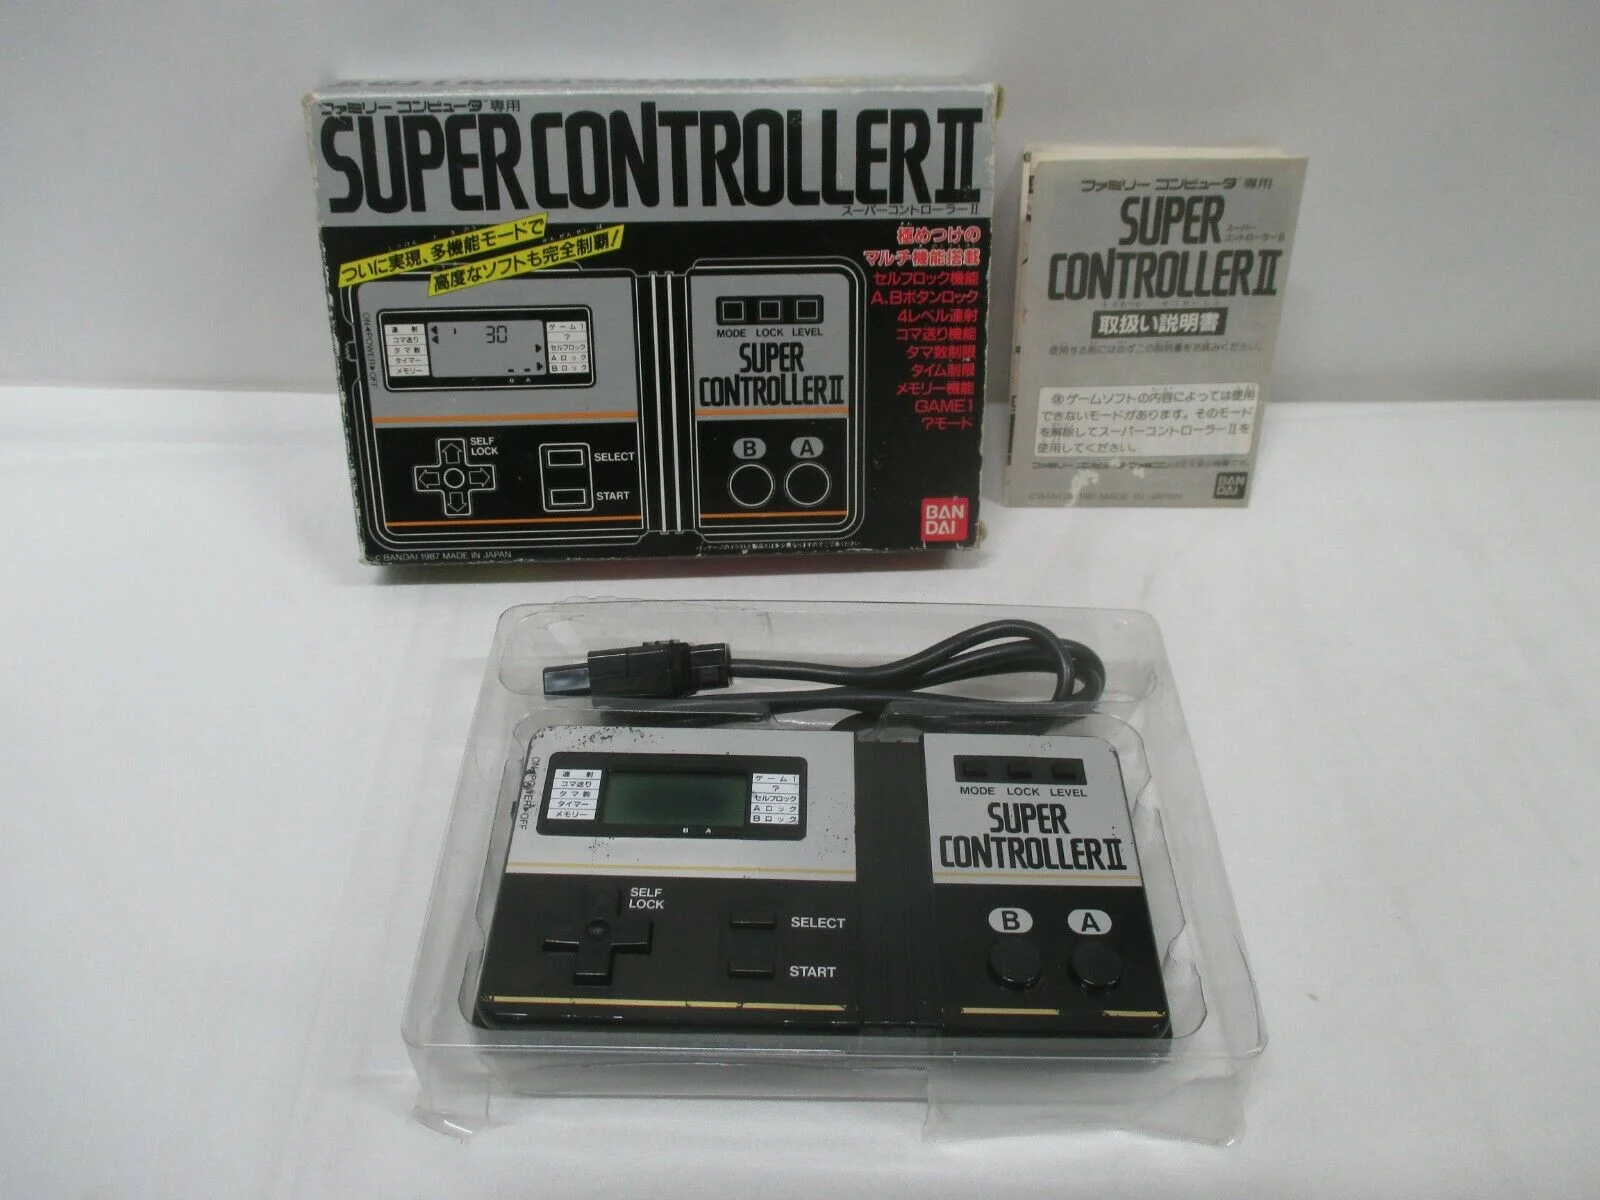  Bandai Famicom Super Controller II